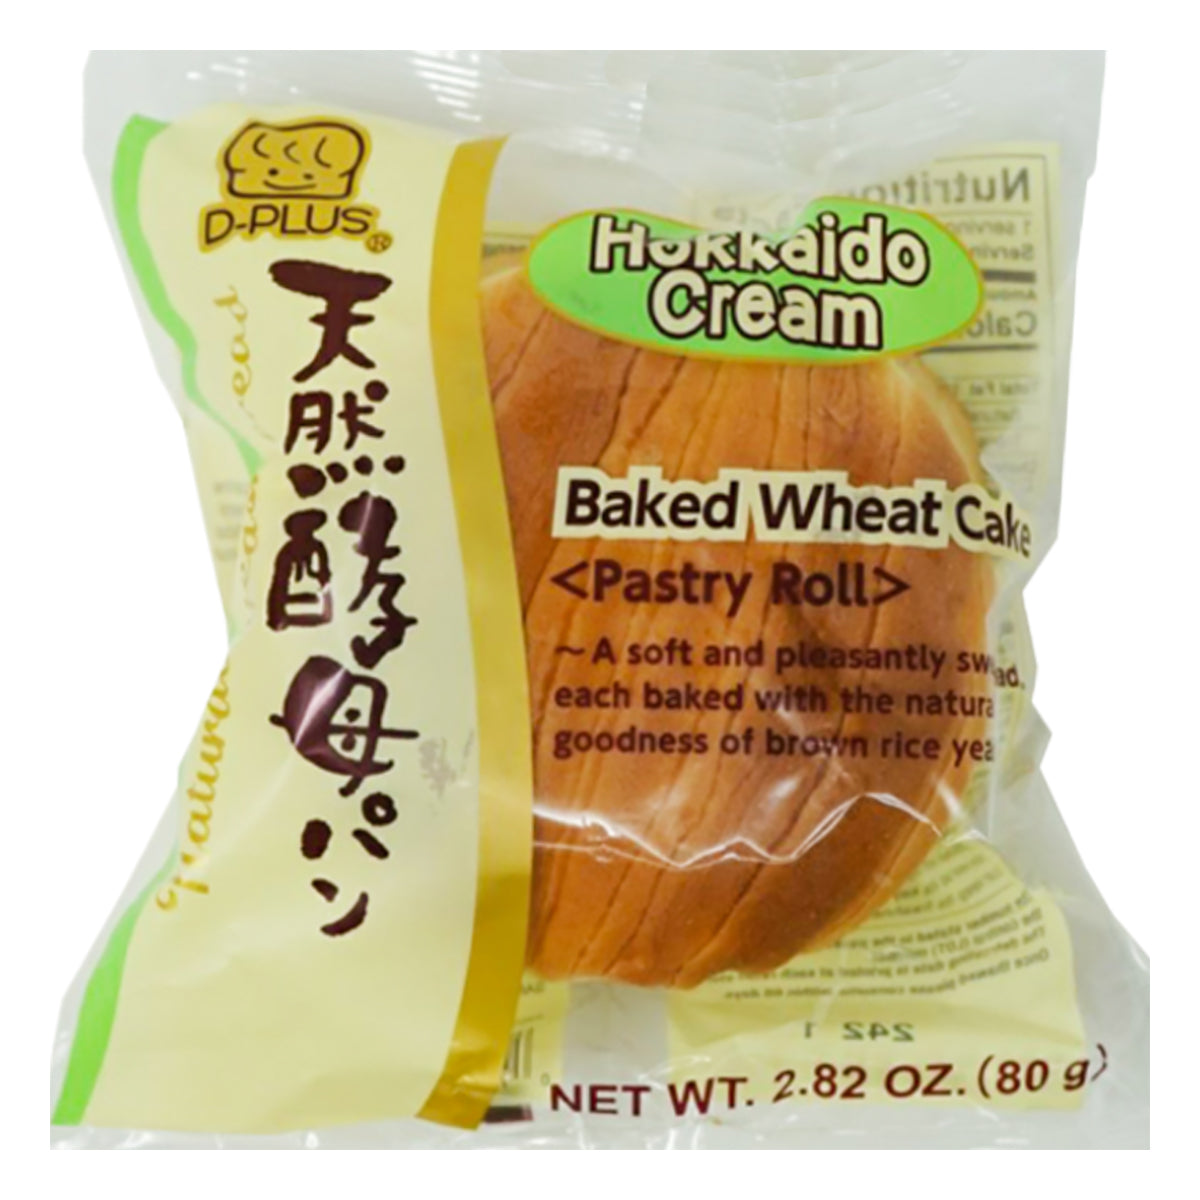 d-plus baked wheat cake hokkaido cream - 2.82oz